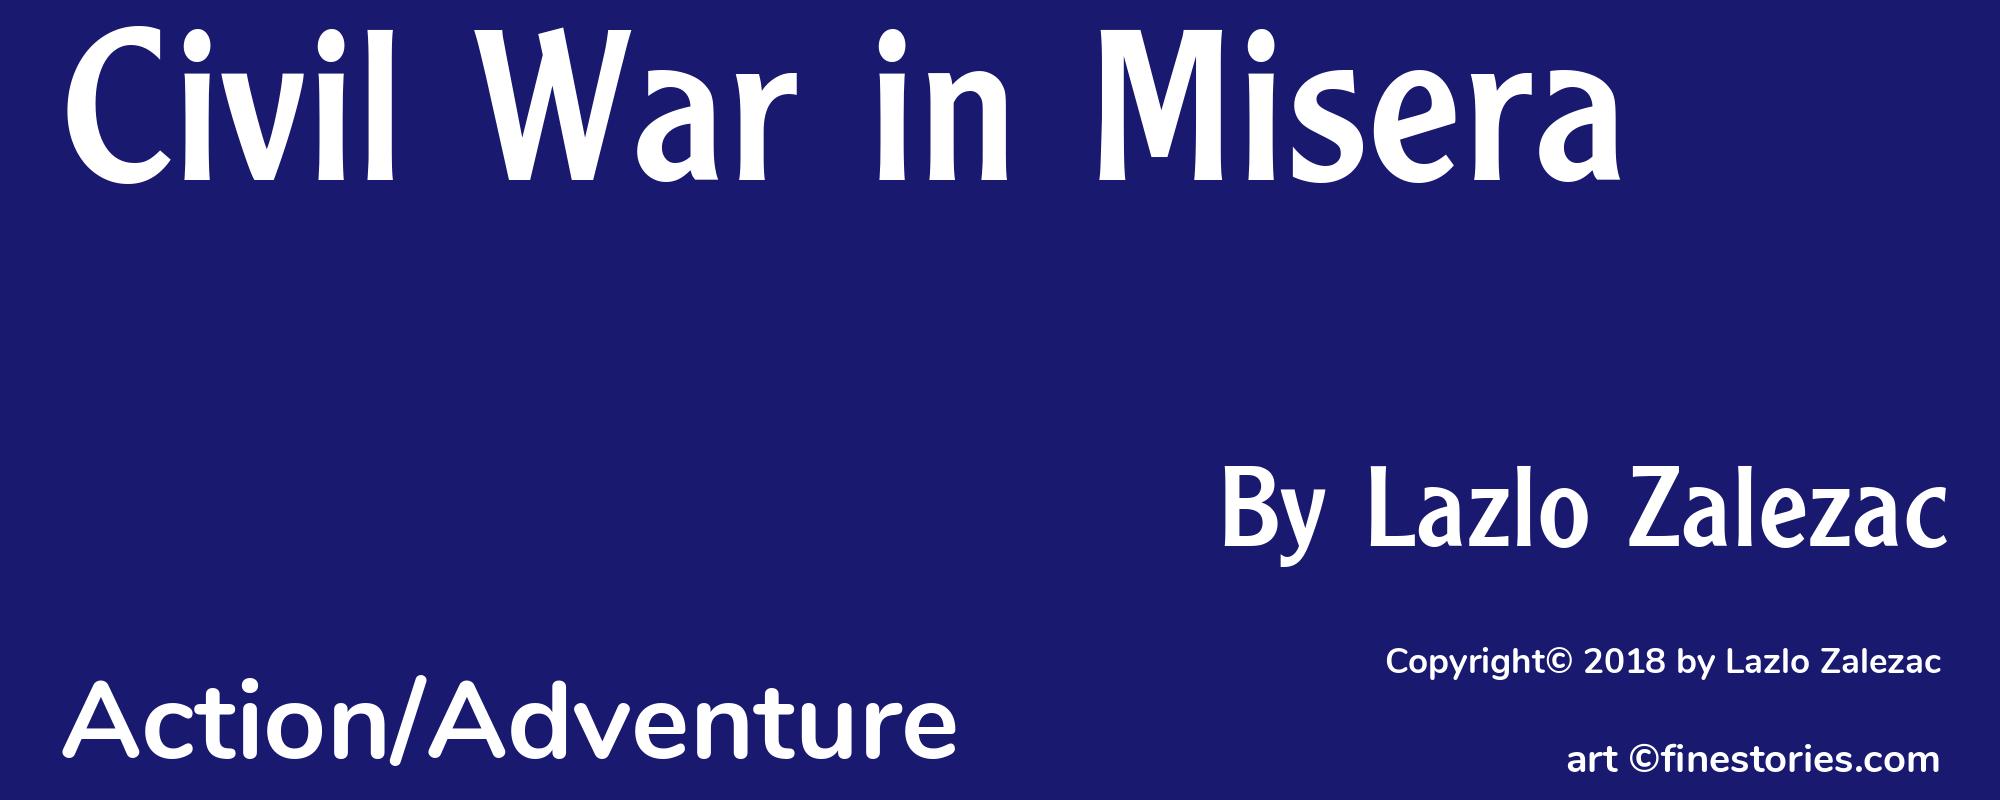 Civil War in Misera - Cover